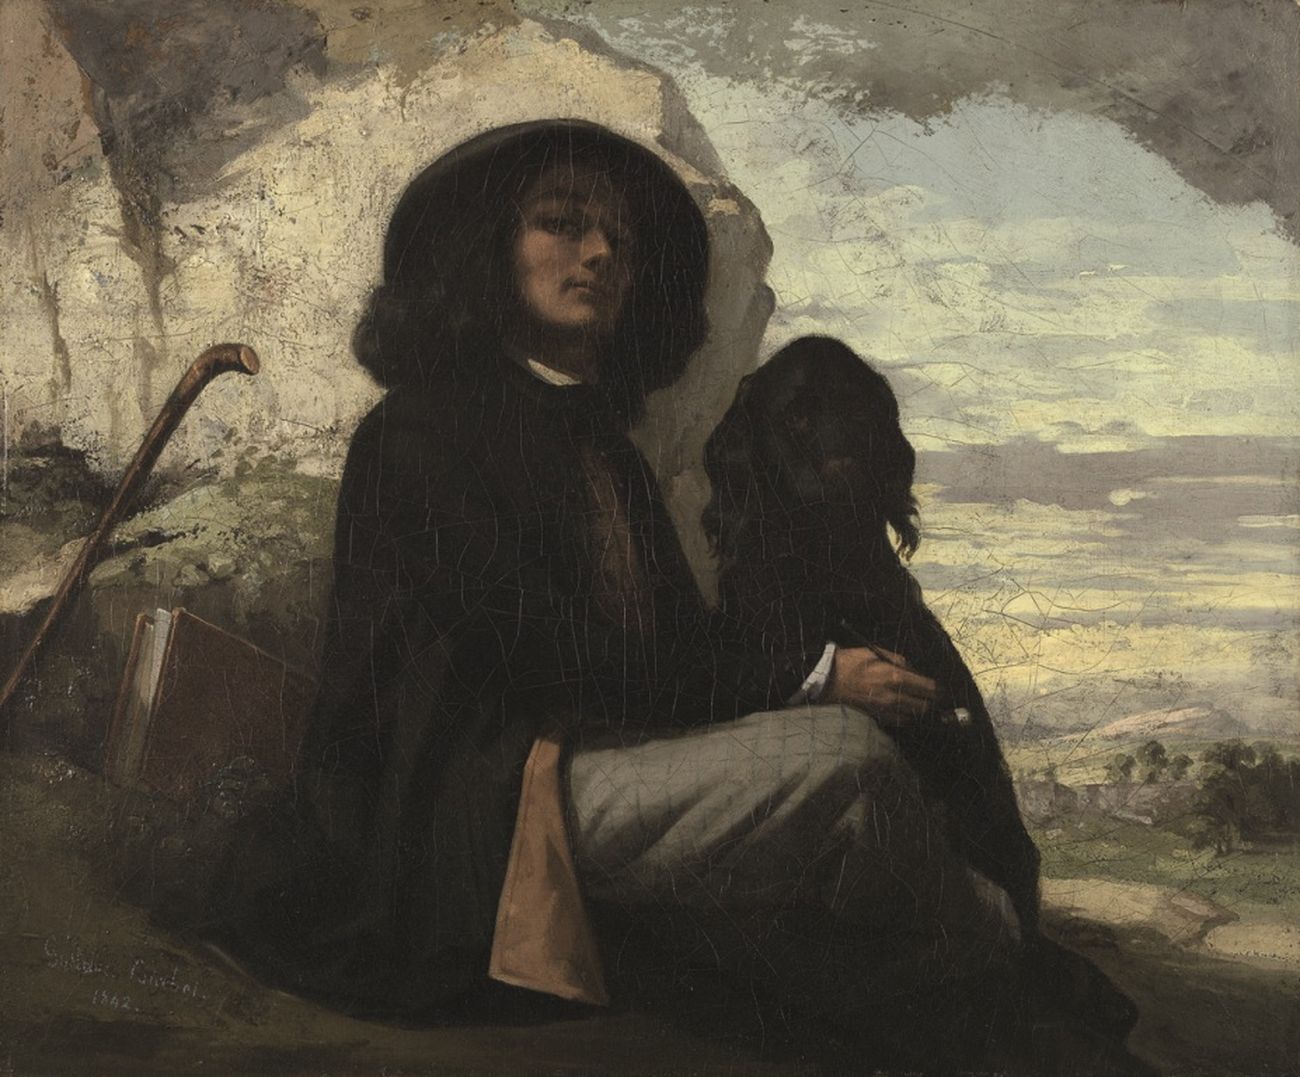 Gustave+Courbet-1819-1877 (86).jpg